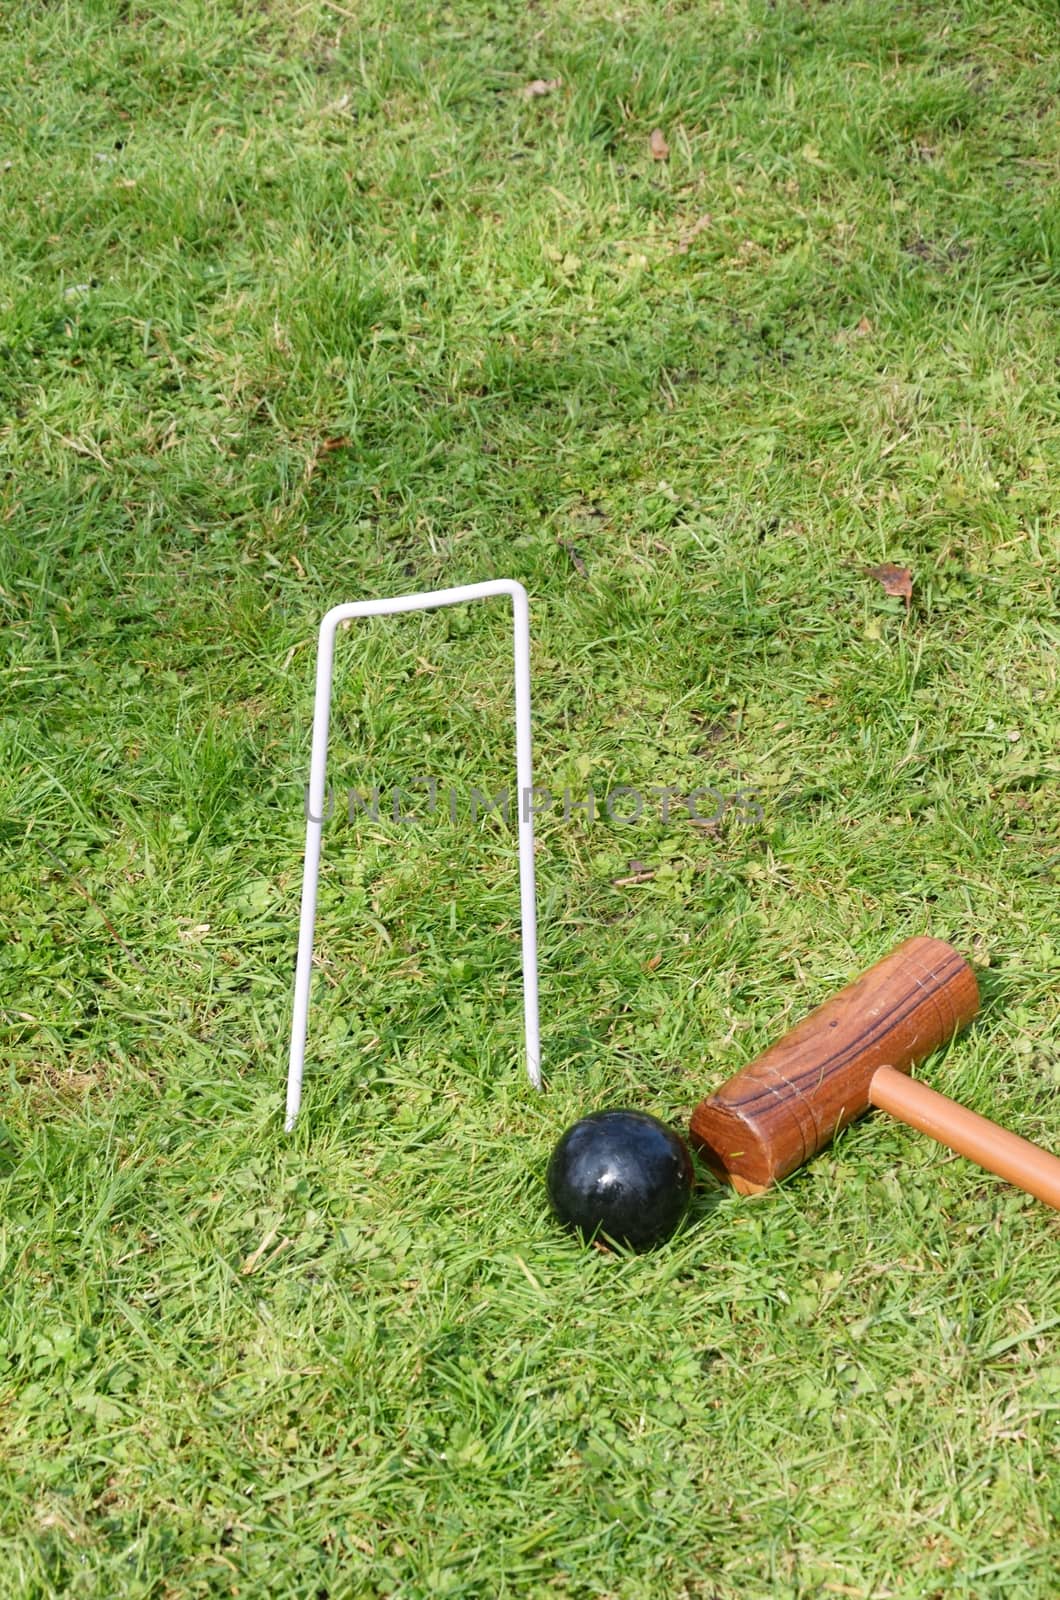 Croquet hoop Mallet and ball